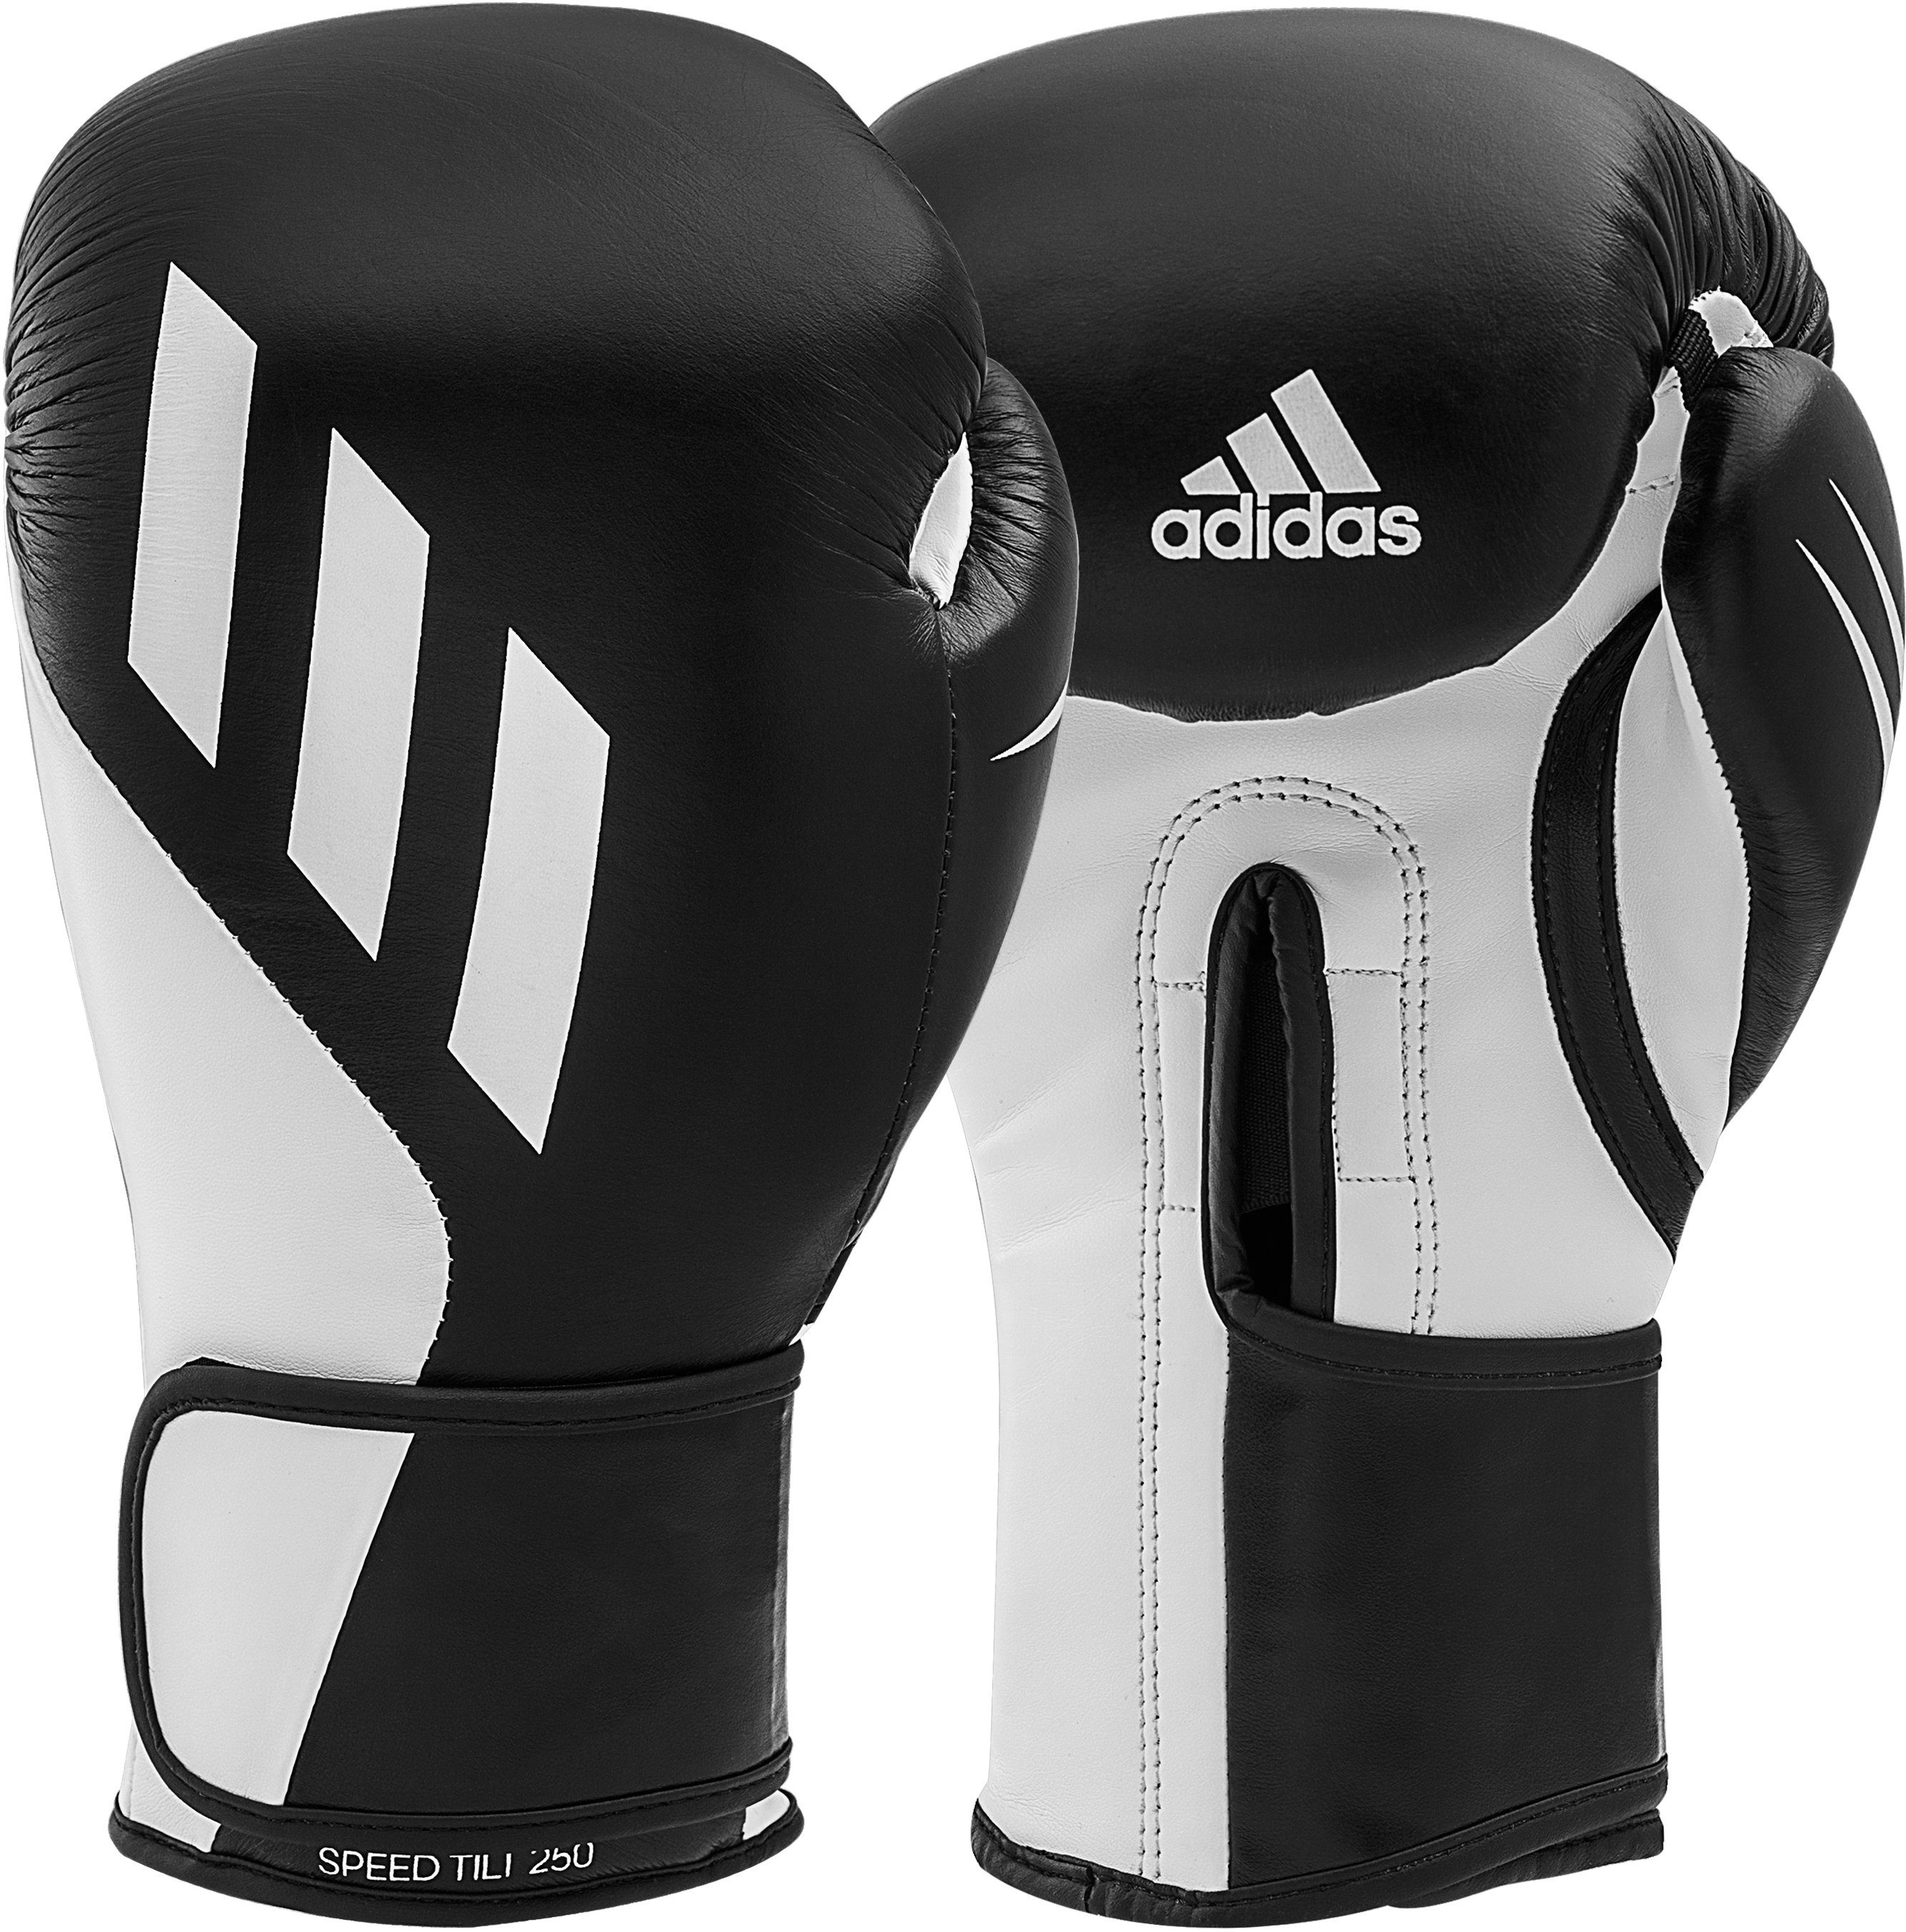 adidas Performance Boxhandschuhe schwarz/weiß